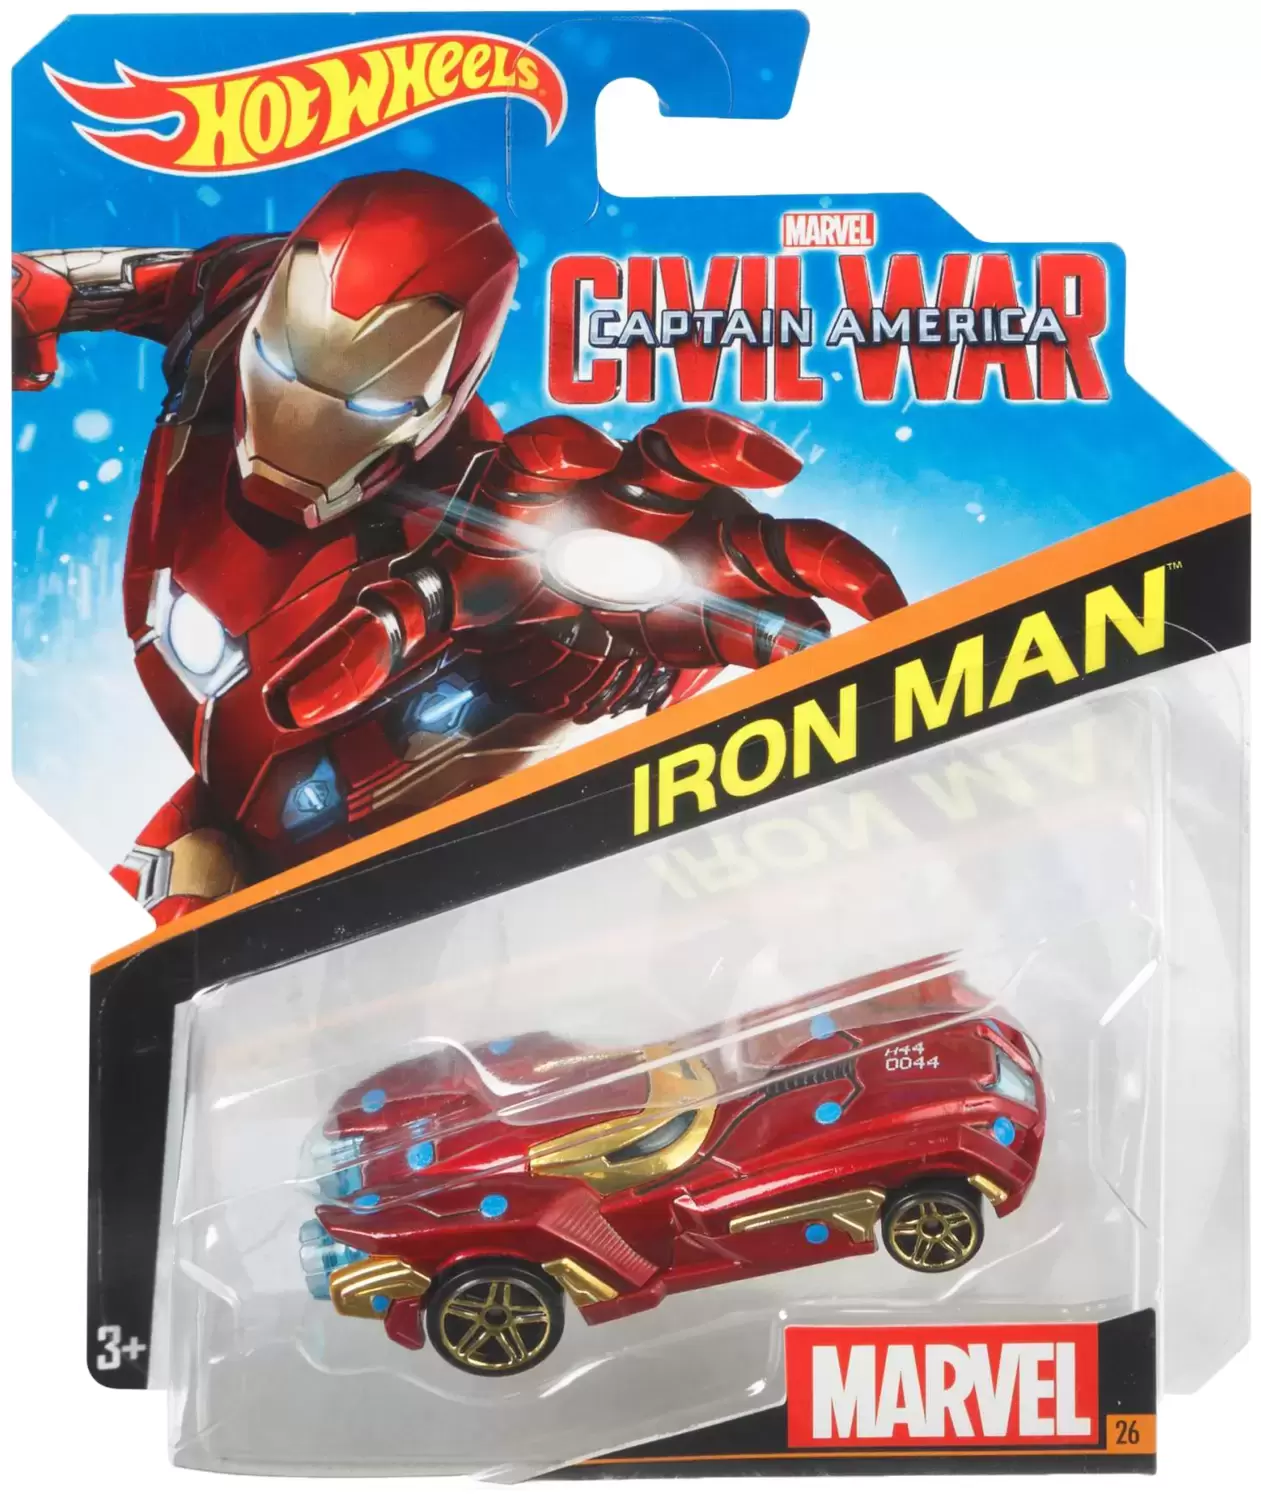 Marvel Character Cars - Civil War - Iron Man